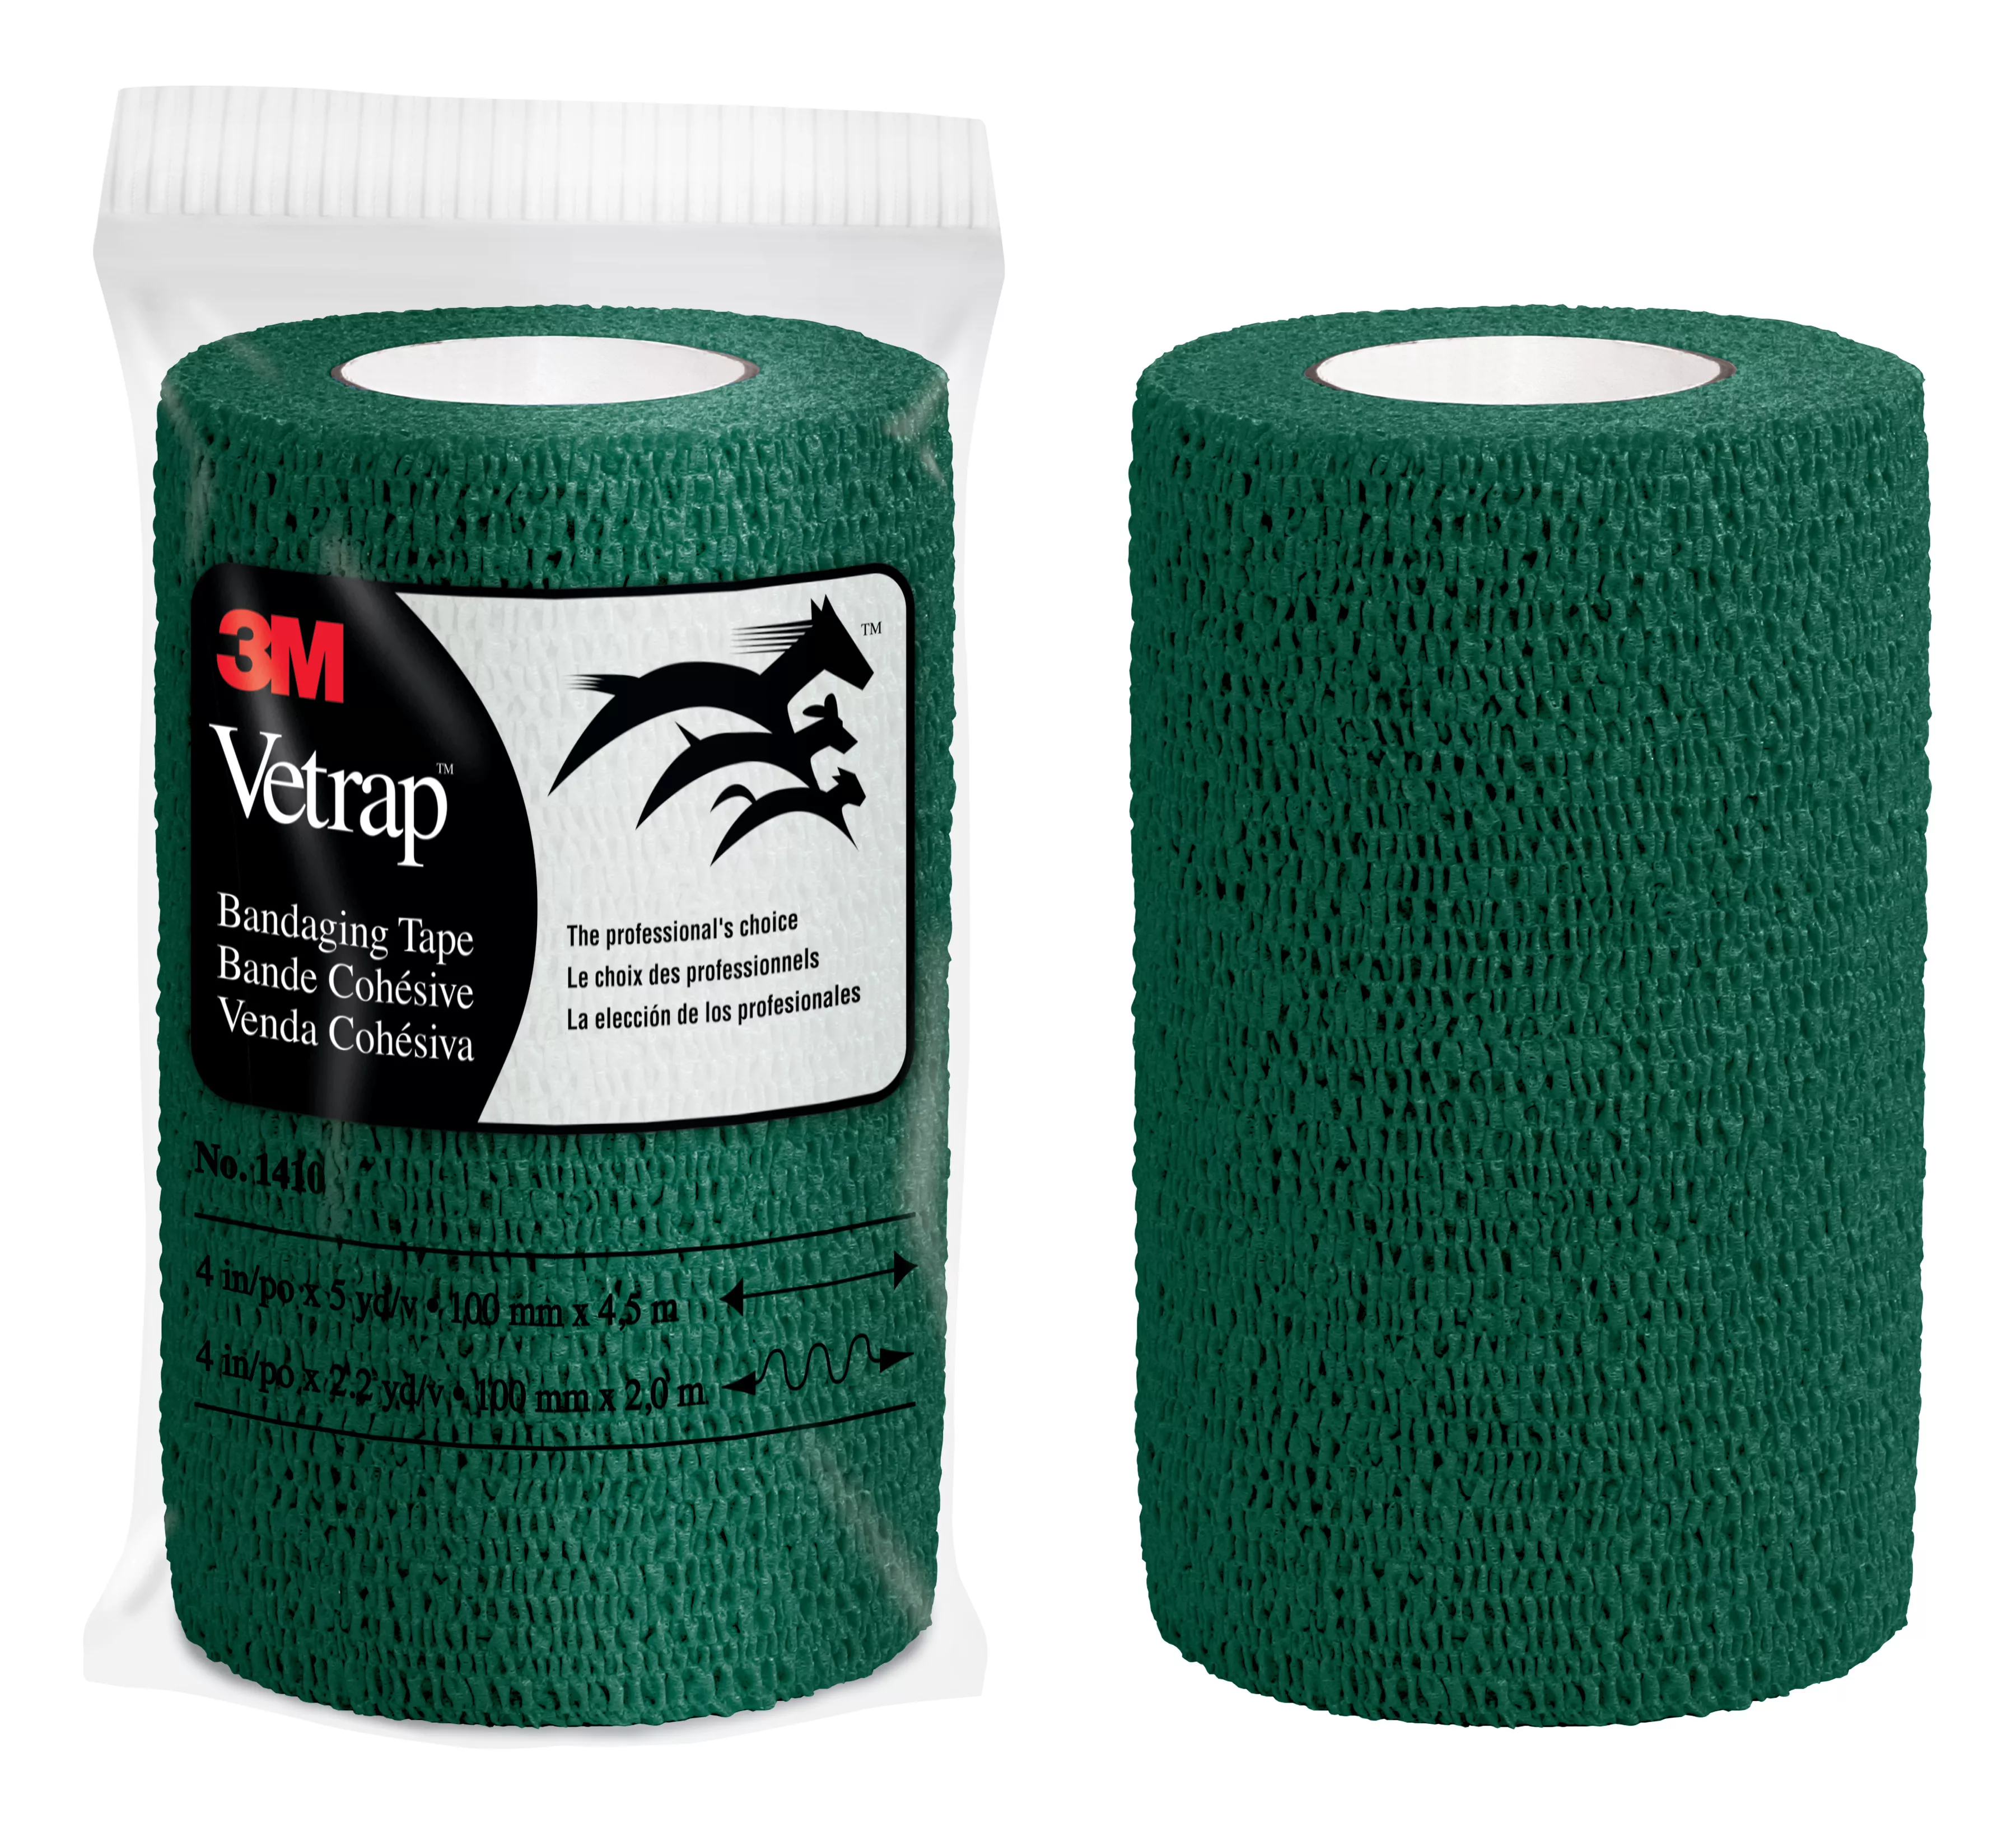 3M™ Vetrap™ Bandaging Tape 1410HG-18, Hunter Green, 4 inch (10 cm), 18 Rolls/Case